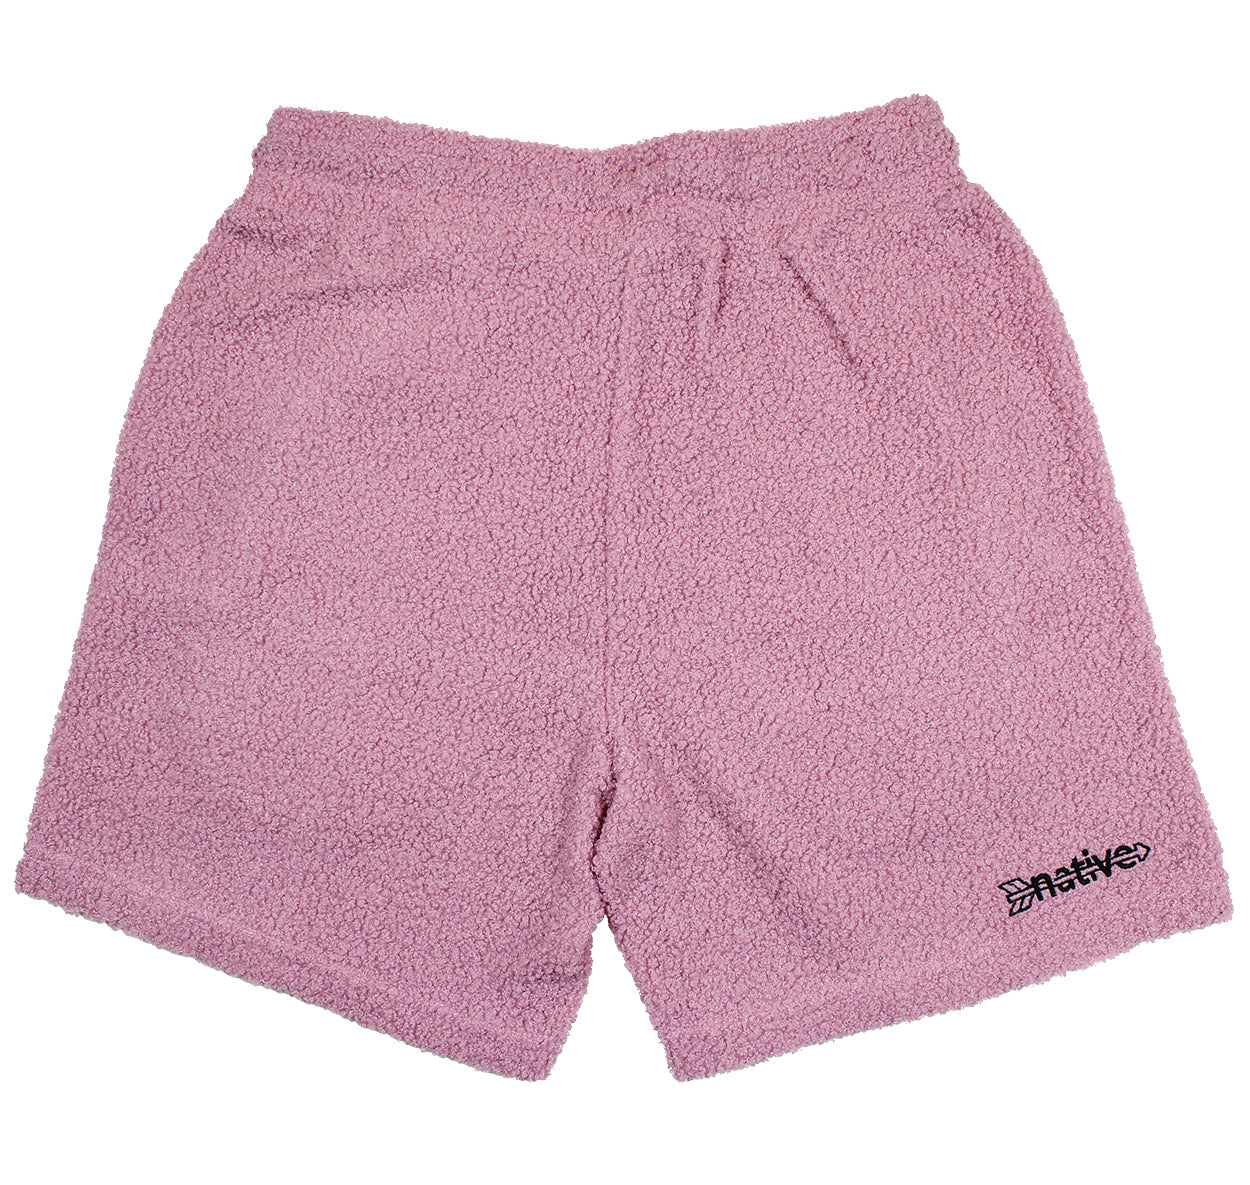 sherpa shorts in lilac